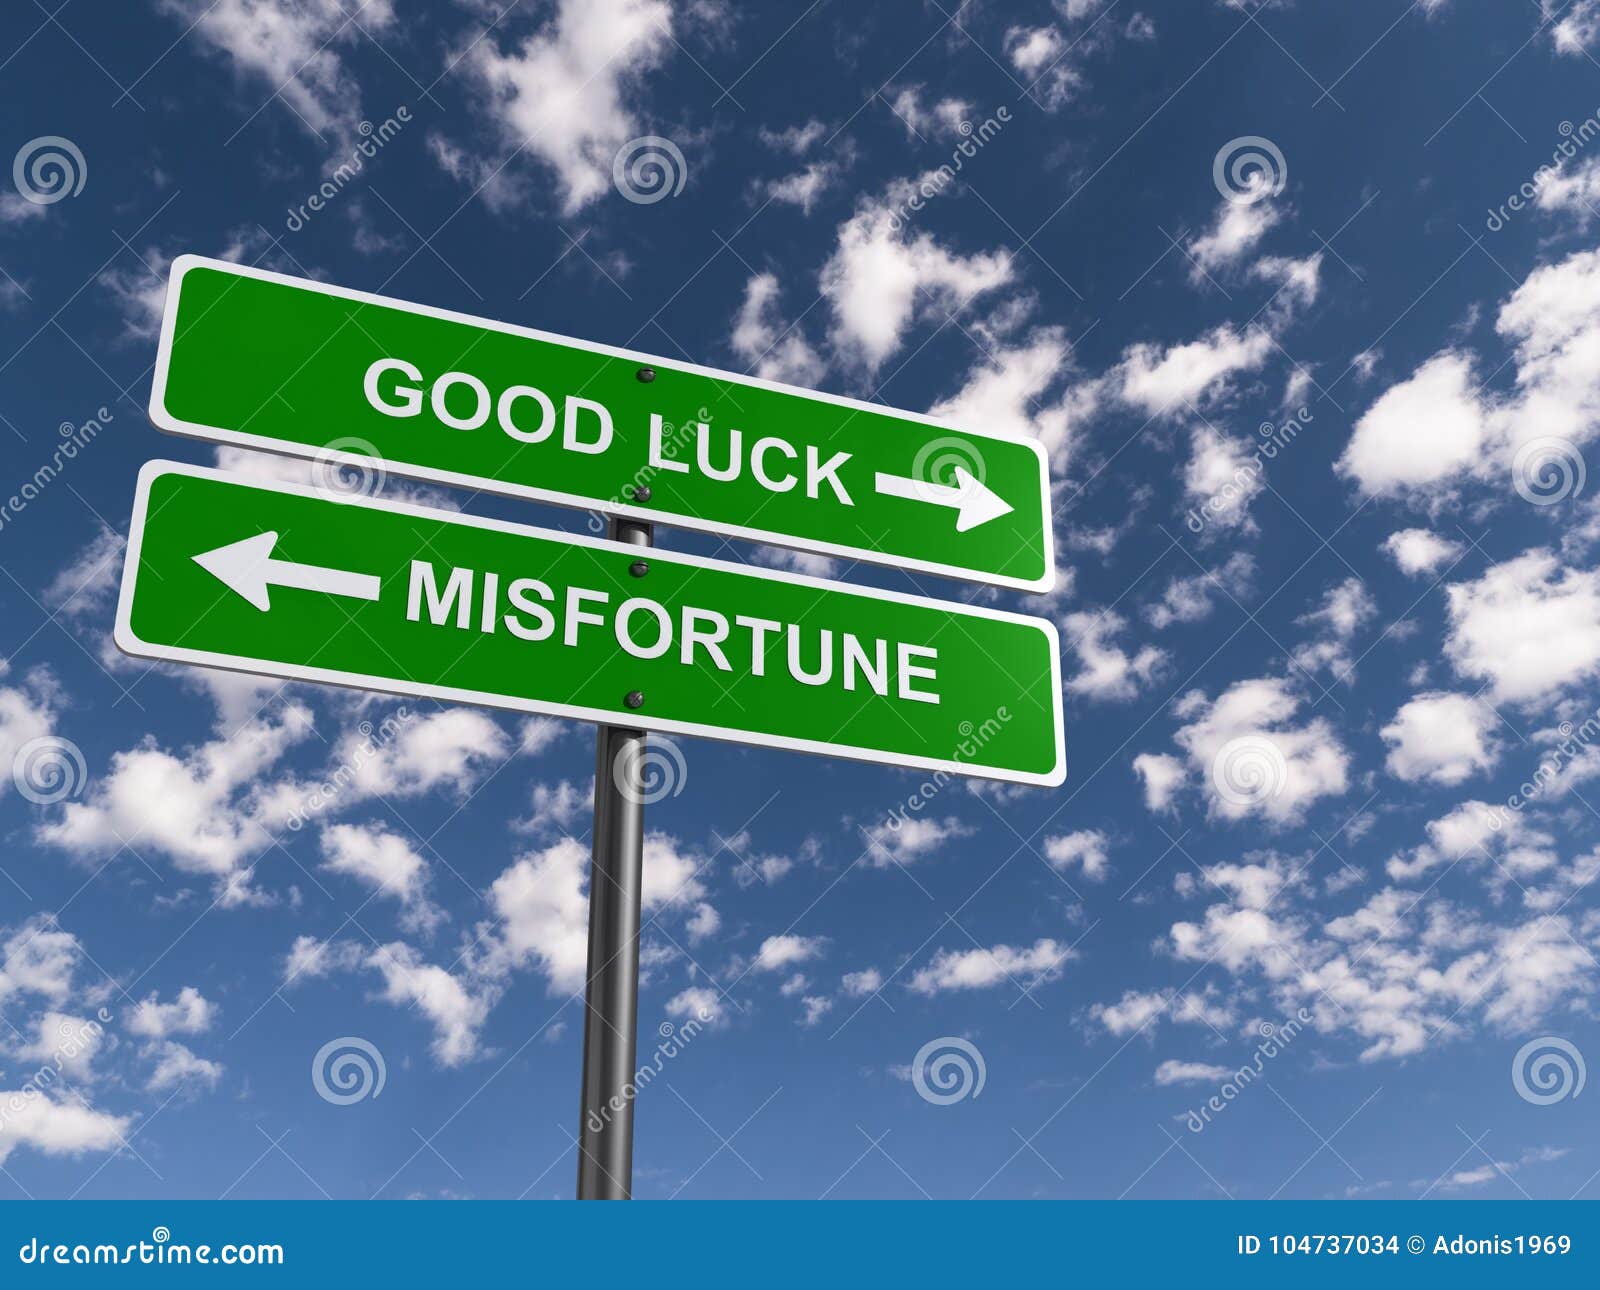 good luck versus misfortune 